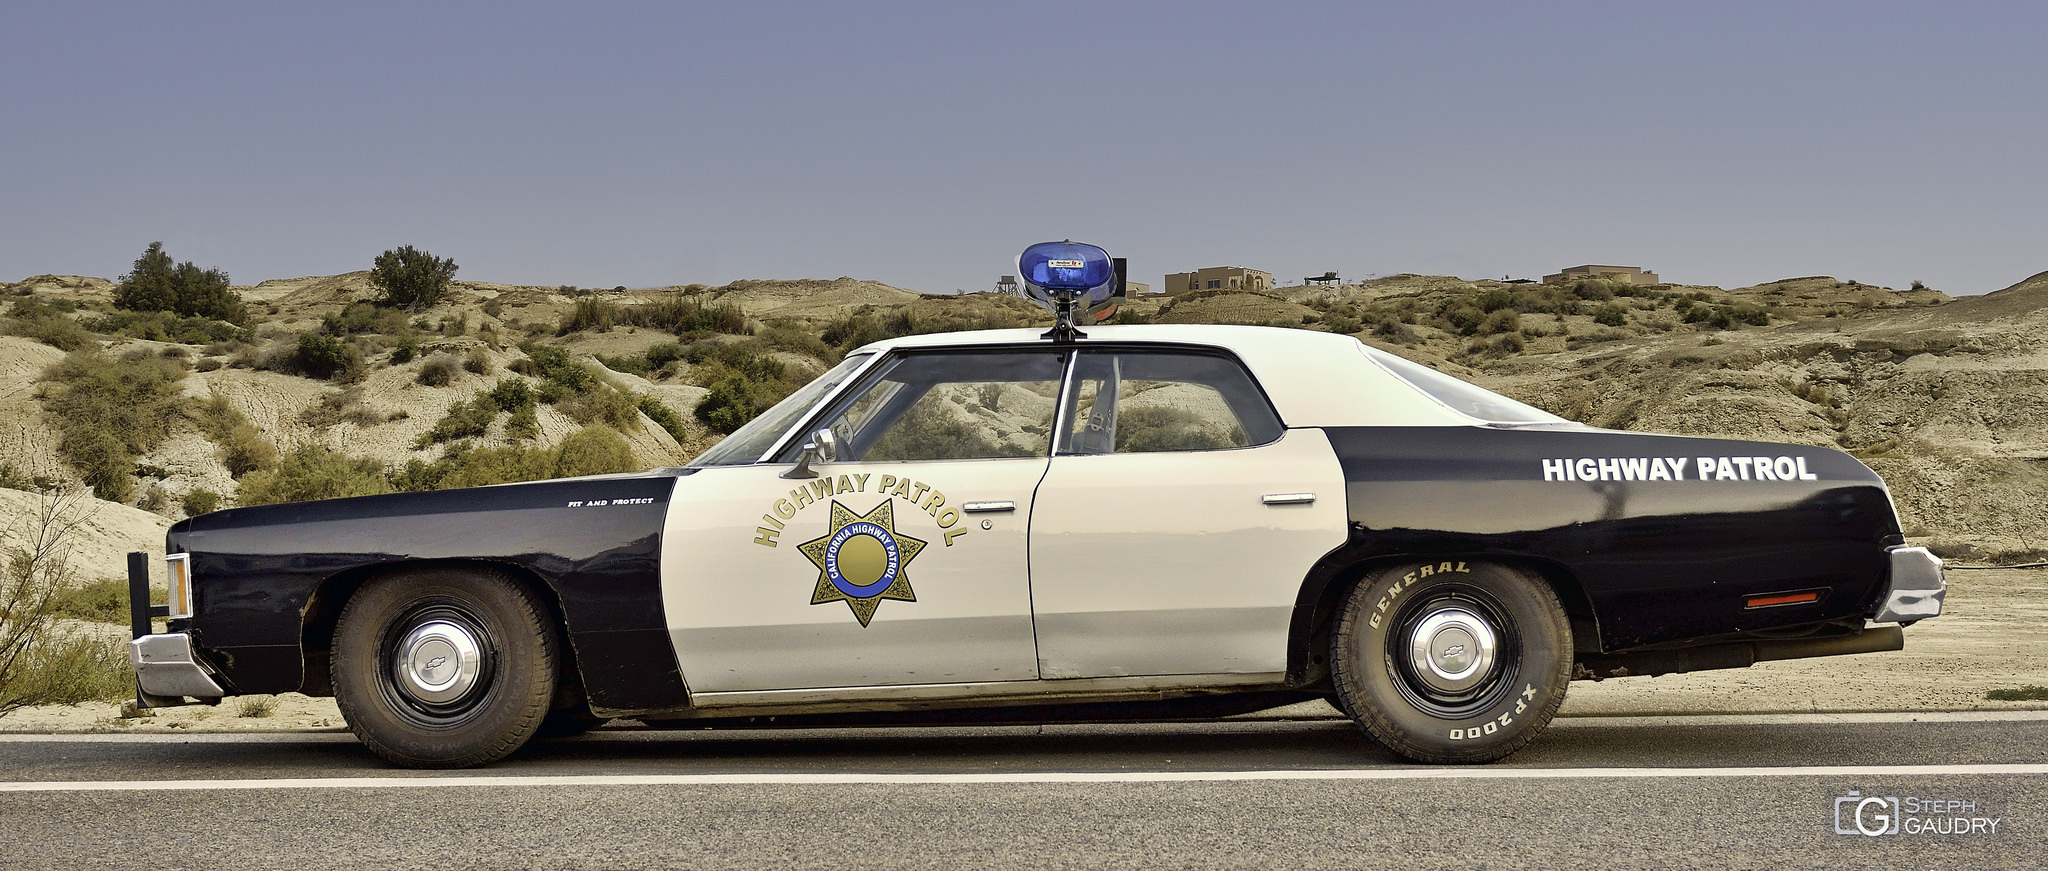 California highway patrol - pit and protect [Klik om de diavoorstelling te starten]